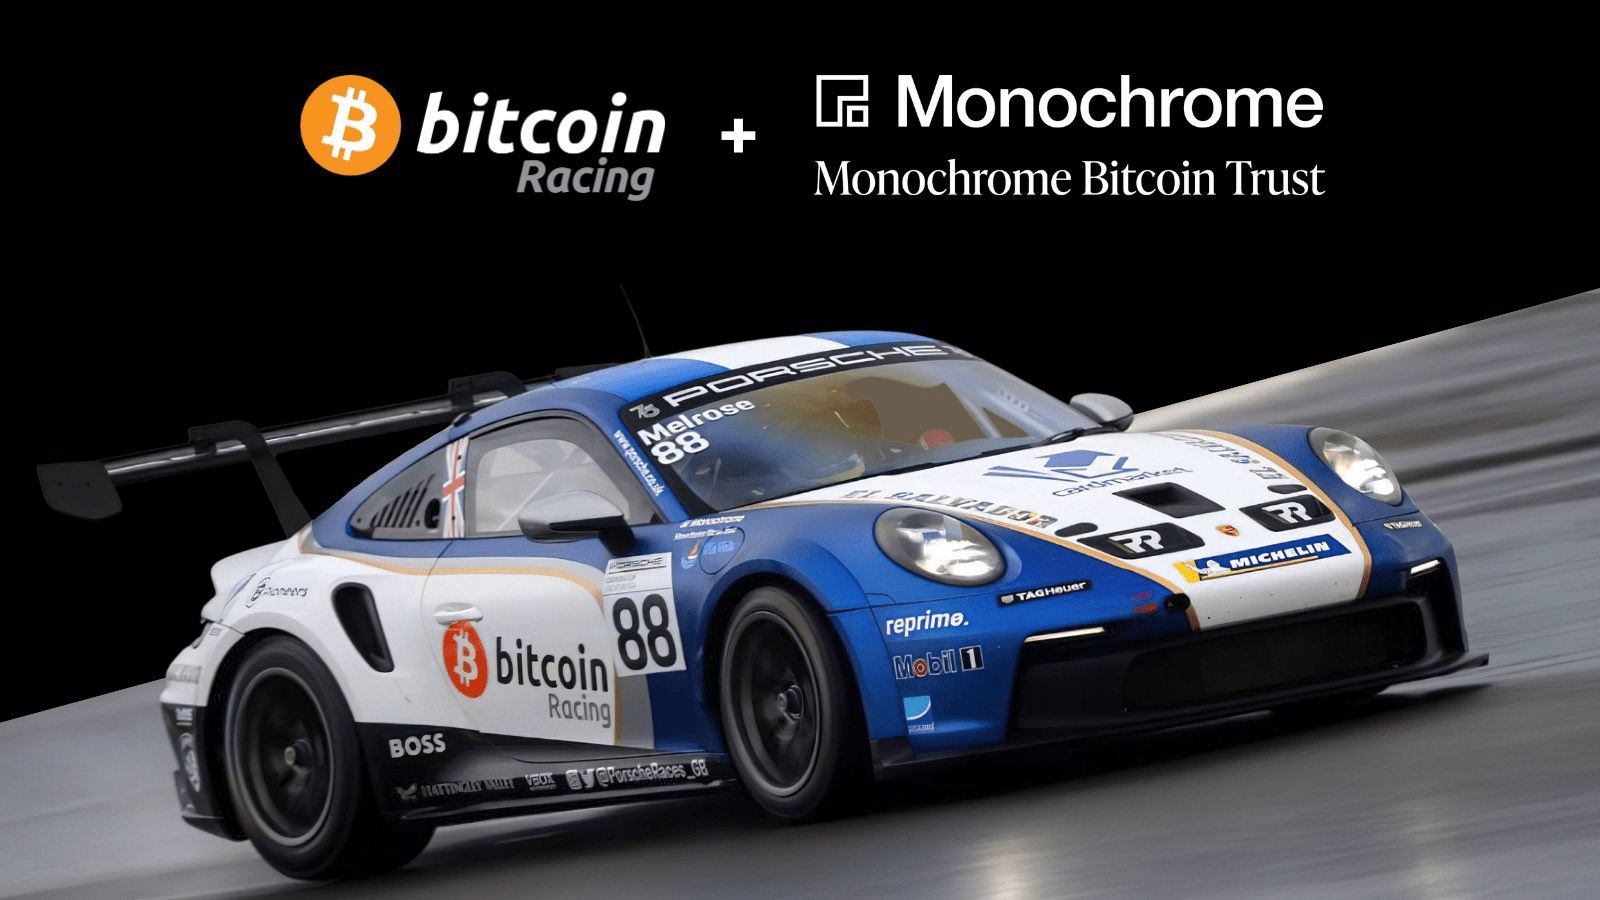 Bitcoin Racing x Monochrome Bitcoin Trust_Livery Porsche Carrera GB Season Cup Car.png